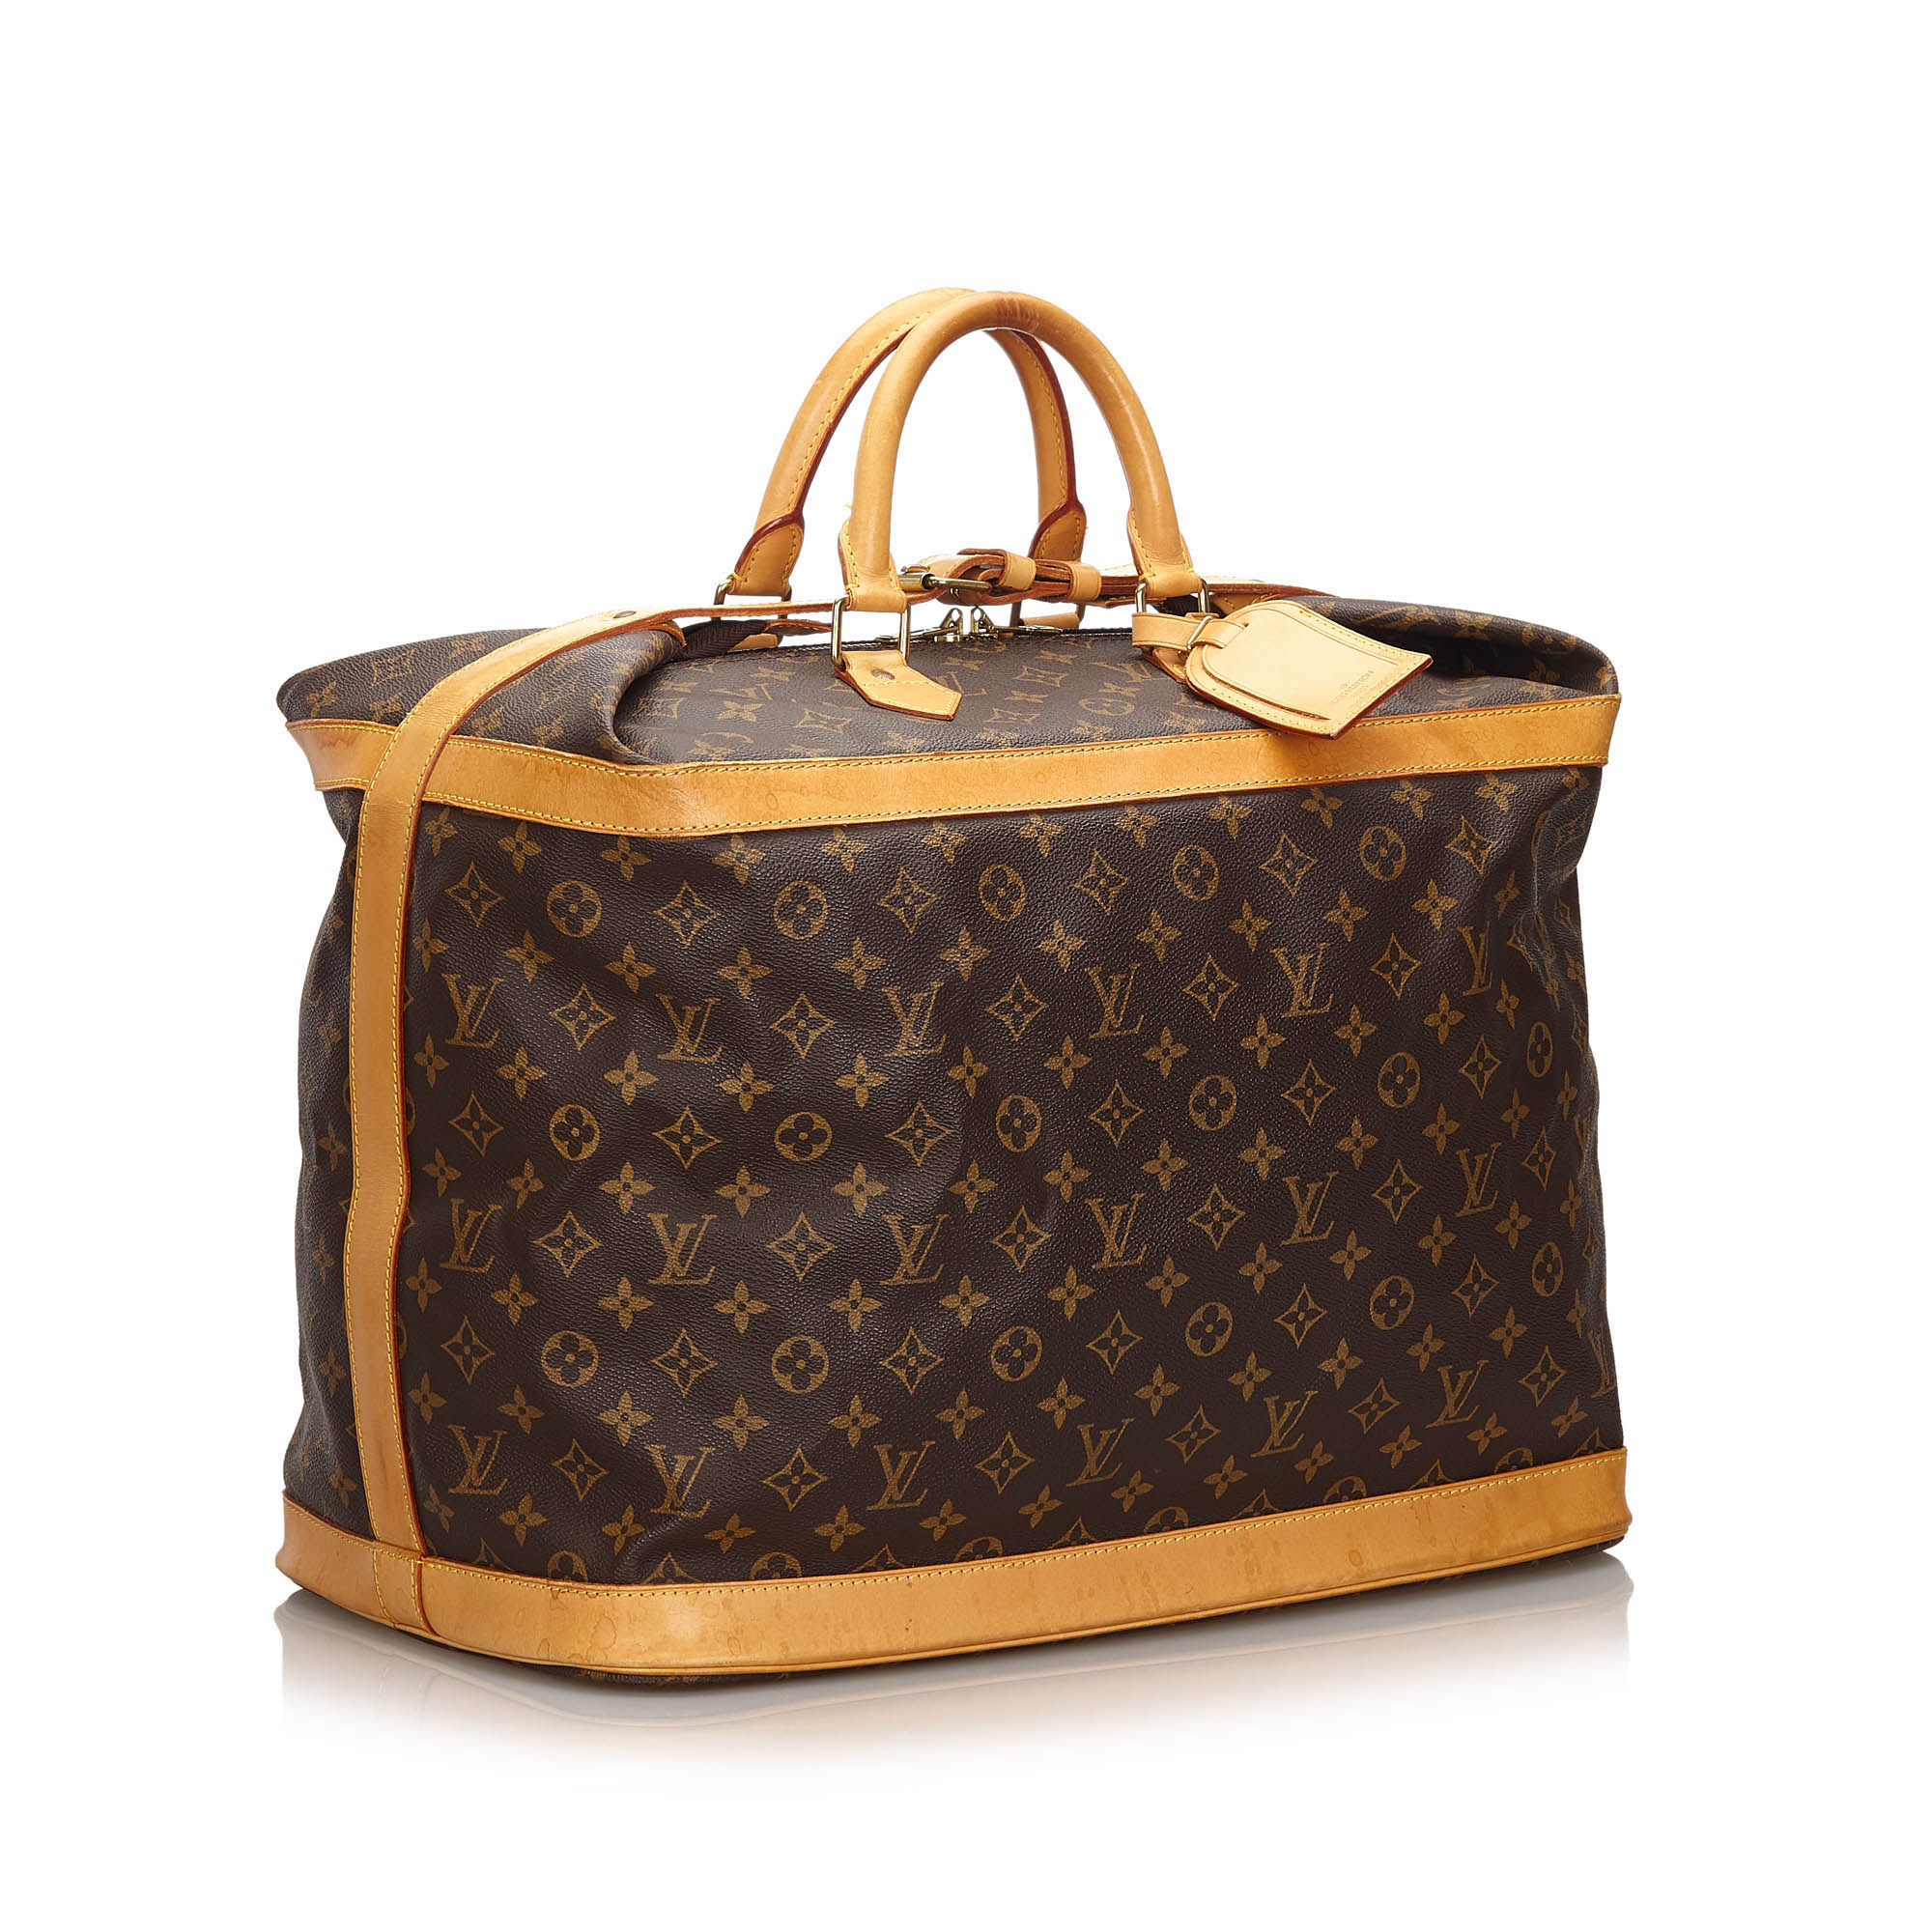 Louis Vuitton Monogram Cruiser 45 Travel Bag, the Cruiser 45 features a monogram canvas body, rol